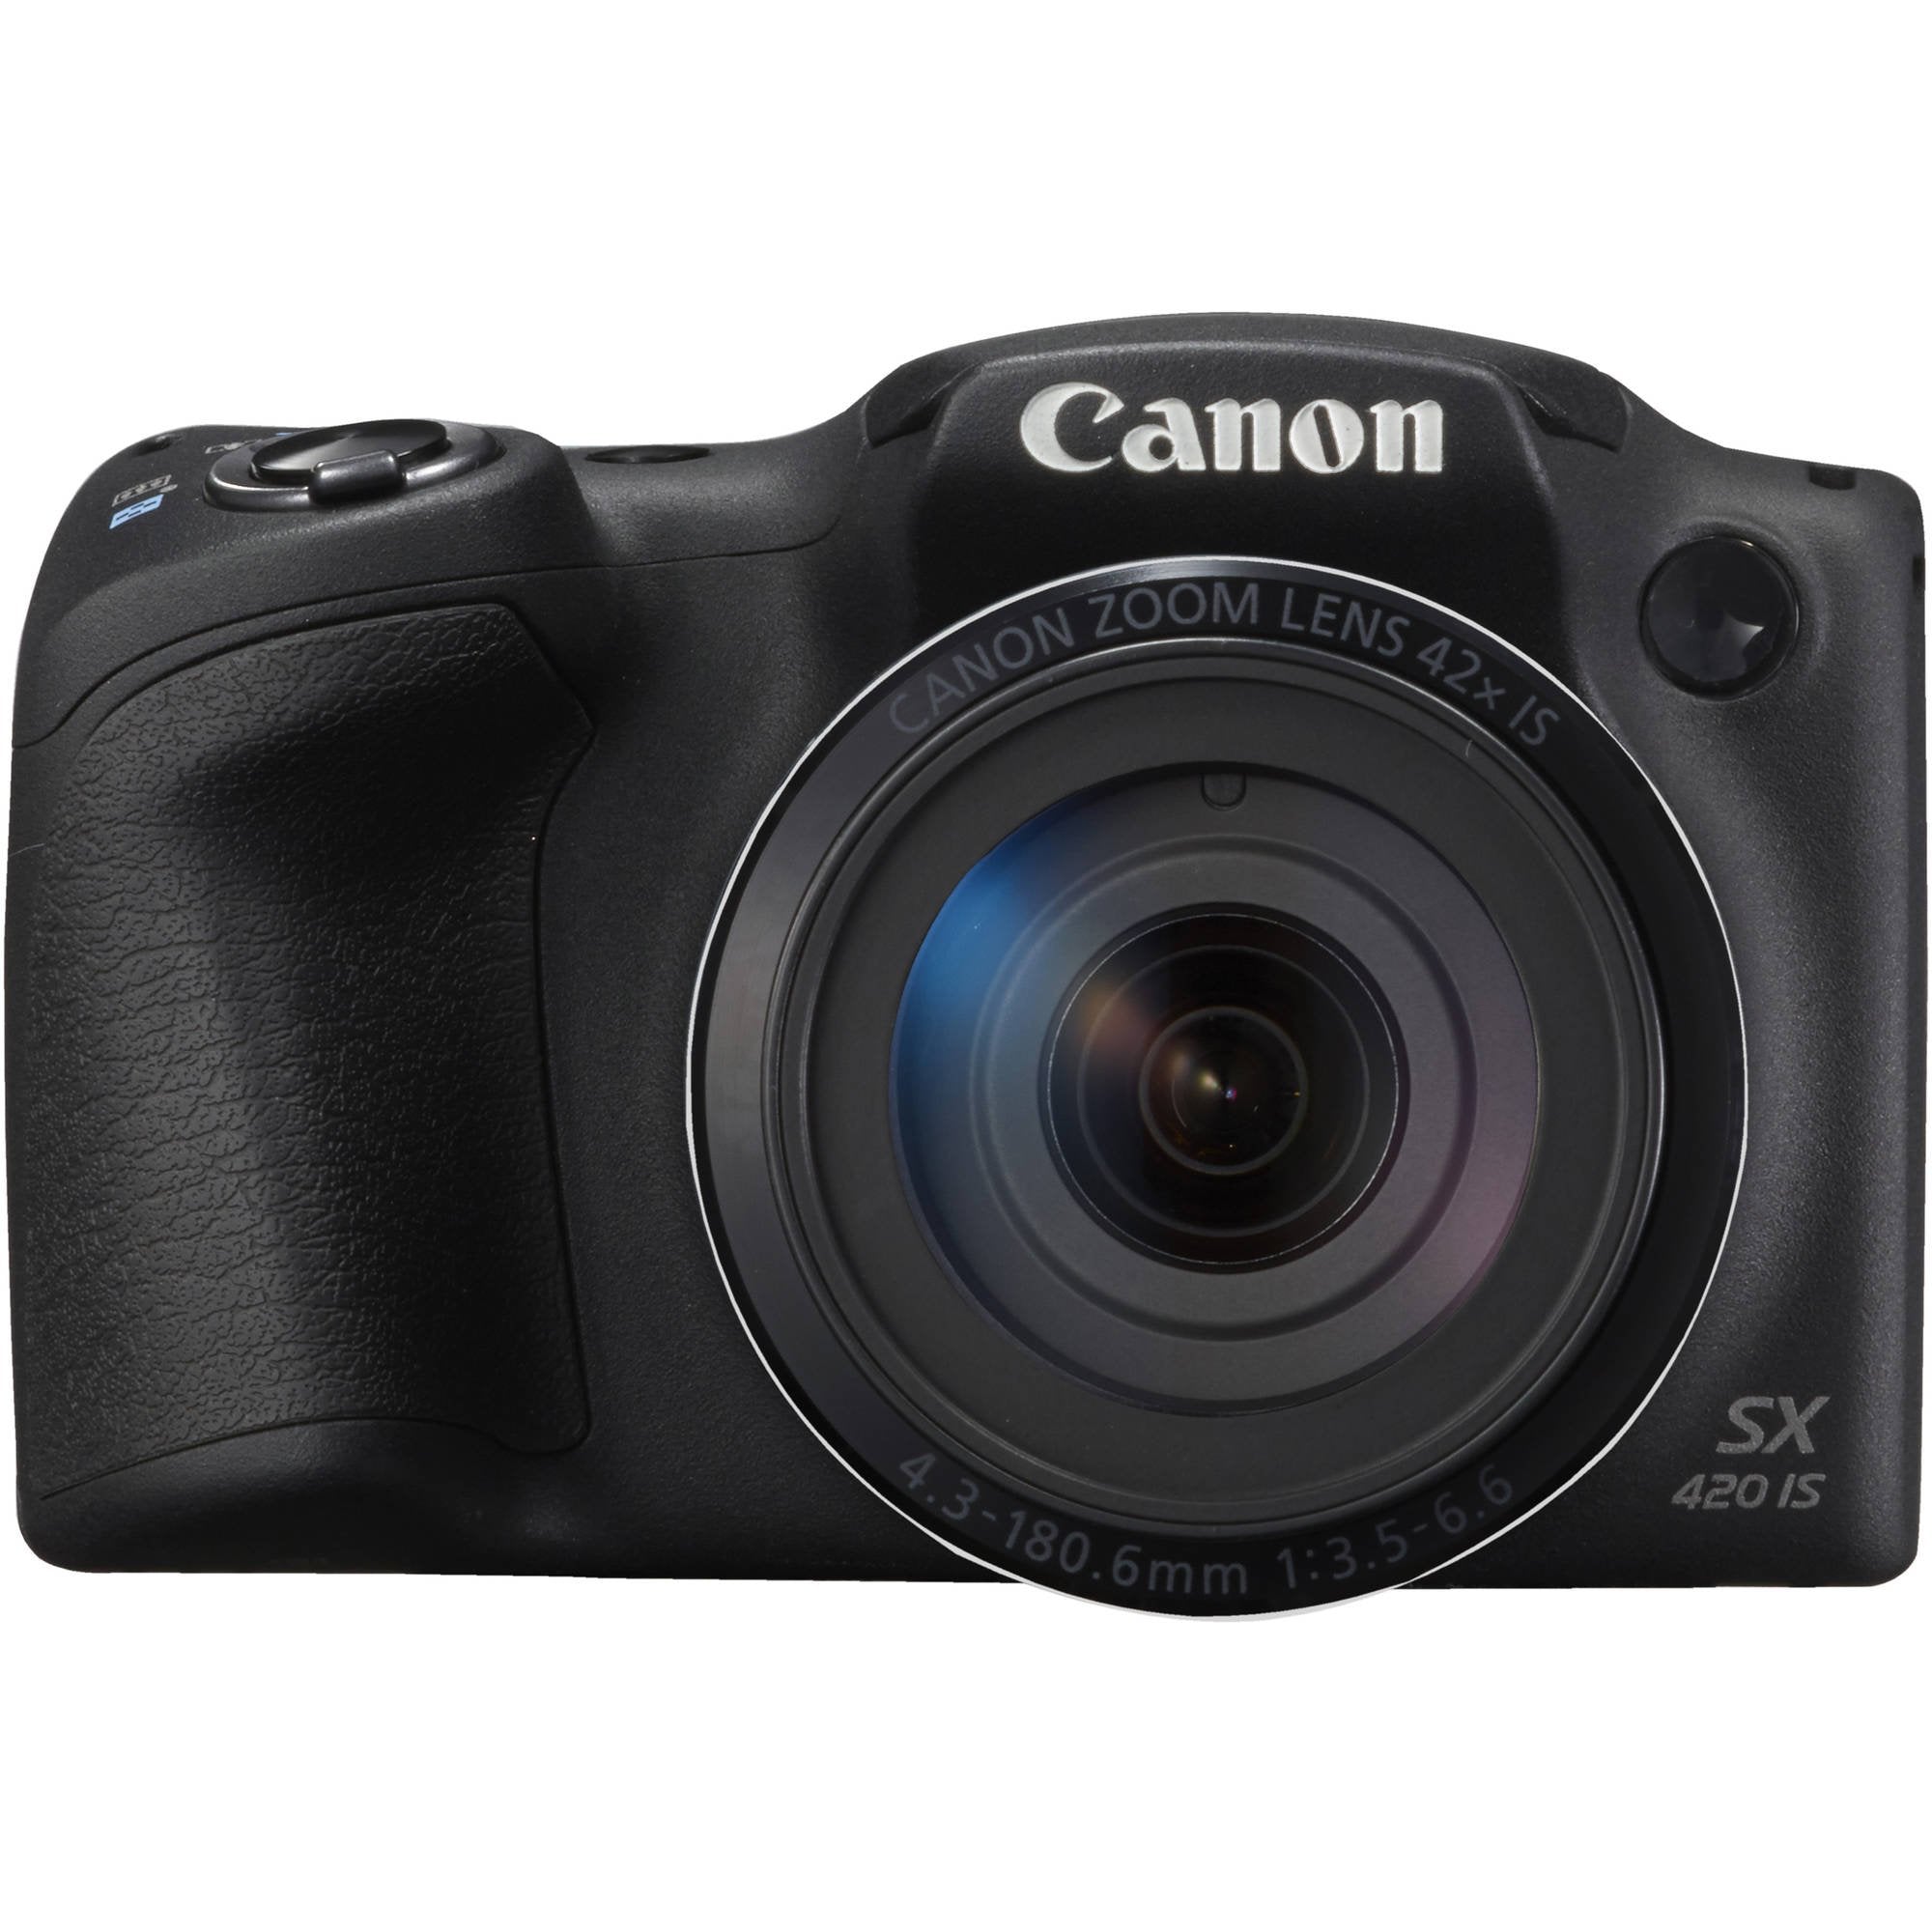 Canon PowerShot SX420 is Digital Camera (Black) 1068C001 International Model + NB-11L Lithium Ion Battery + 16GB Memory Card Starter Bundle